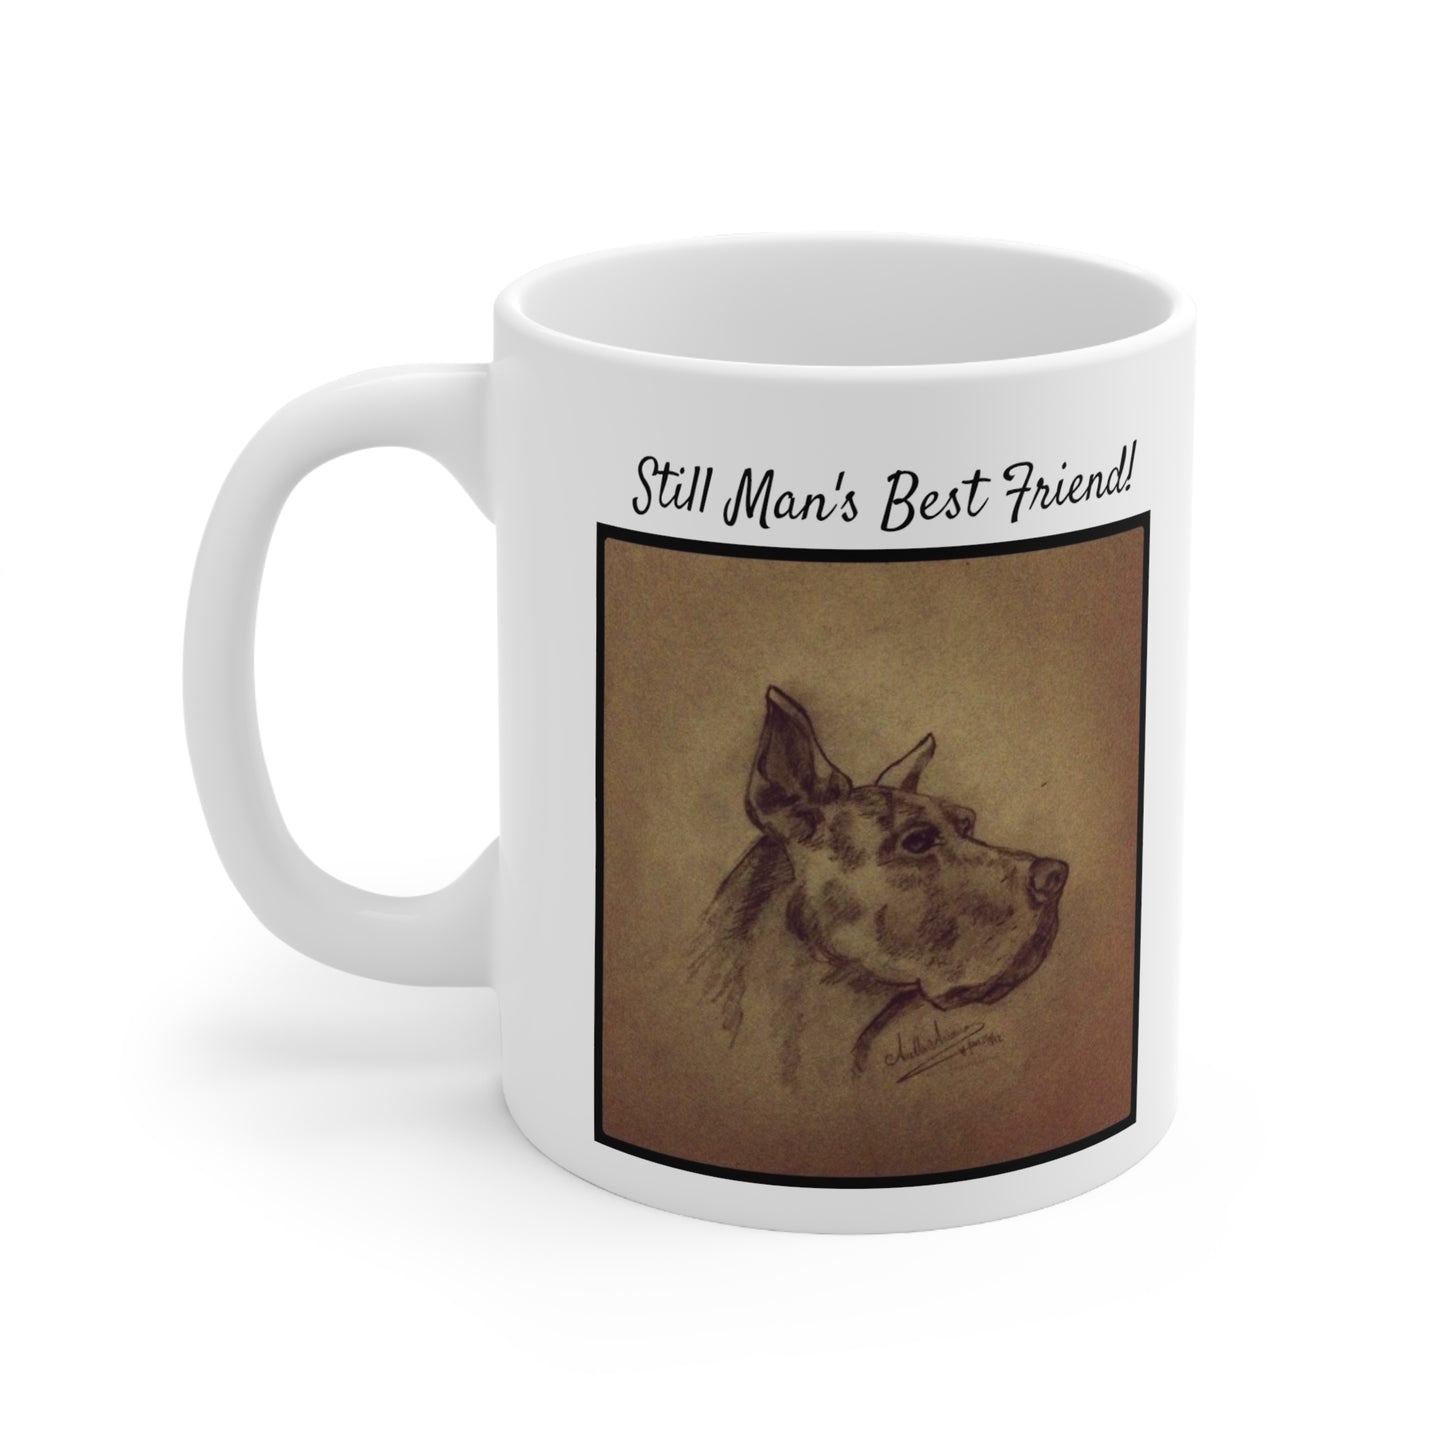 Man's Best Friend White Ceramic Coffee Mug 11oz